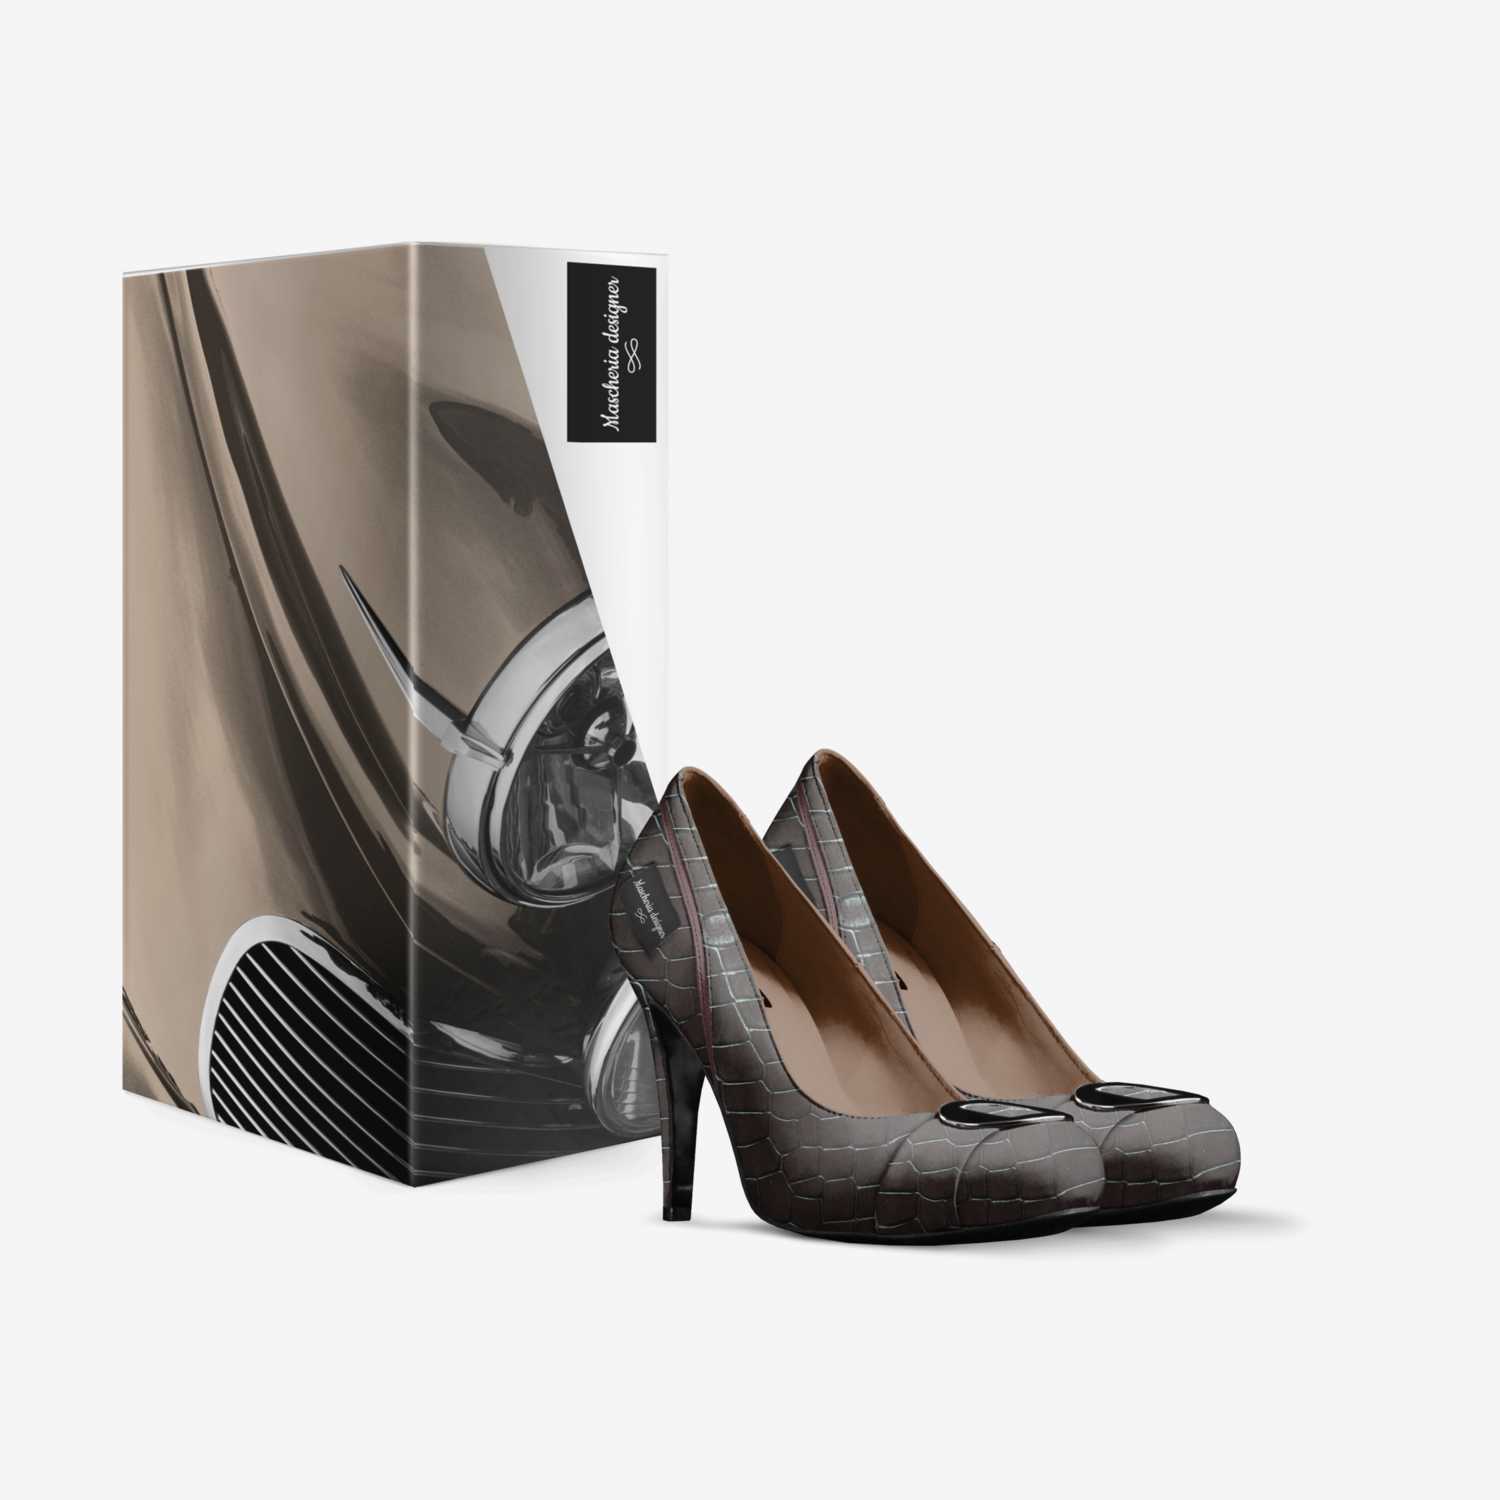 Mascheria designer custom made in Italy shoes by Mascheria G Perdue | Box view